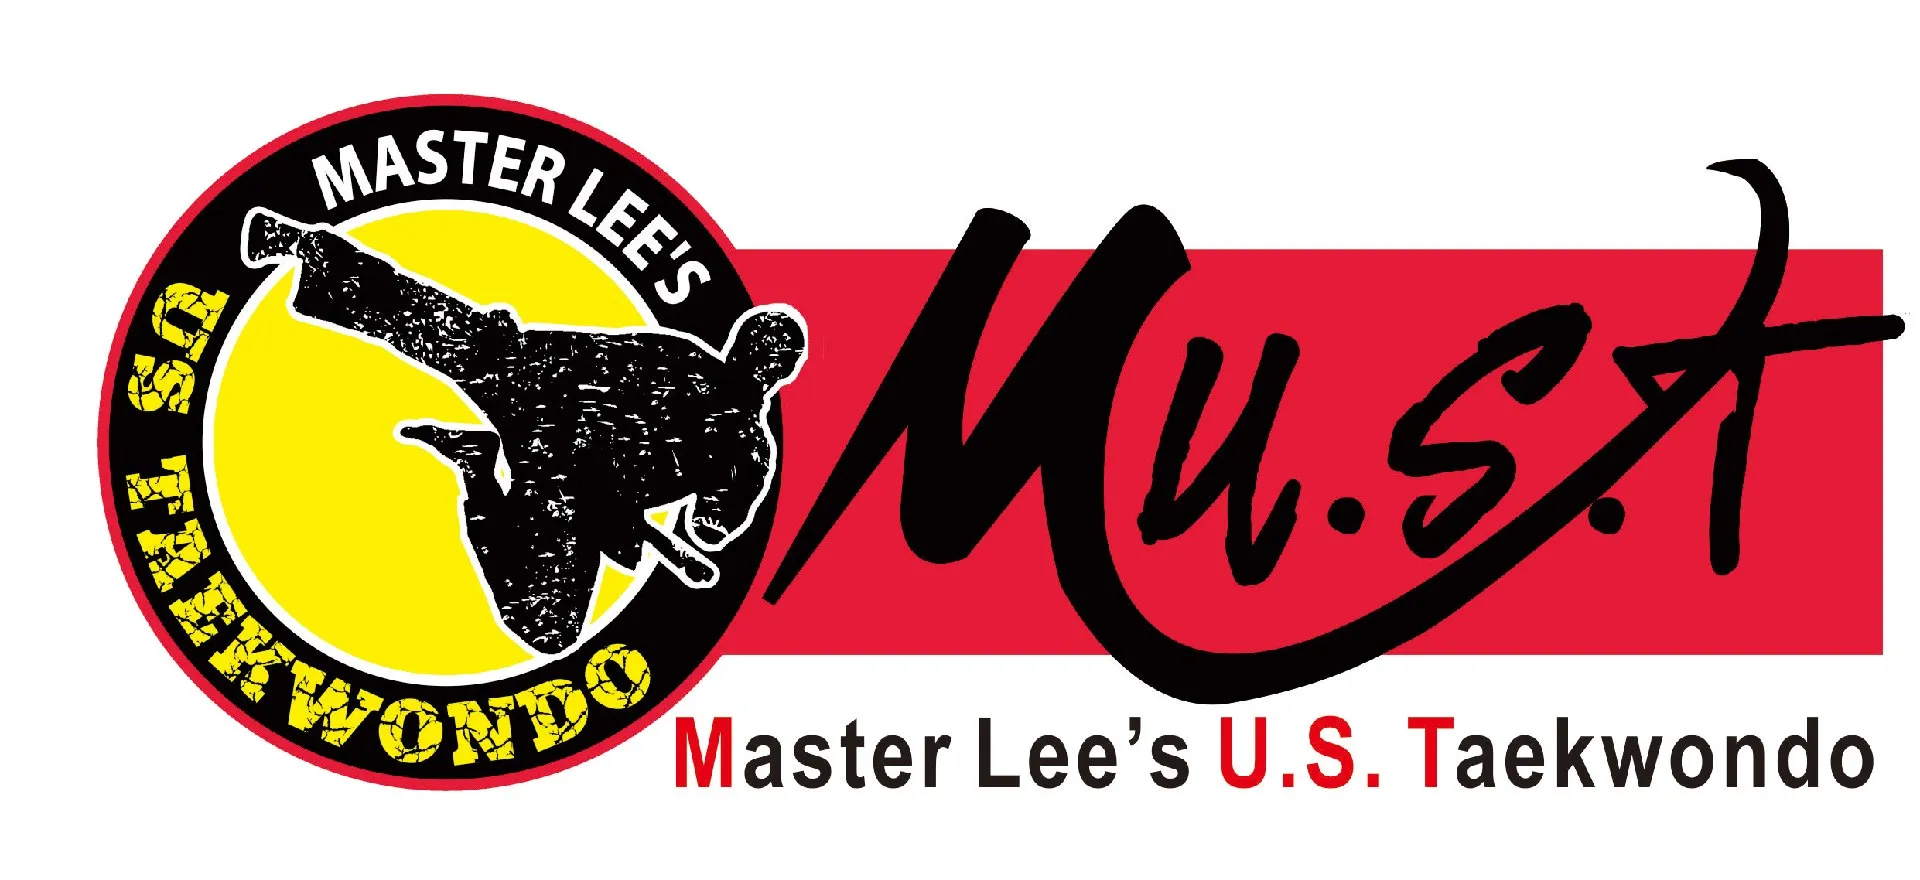 Master Lee's U.S. Taekwondo of Cranston and Warwick